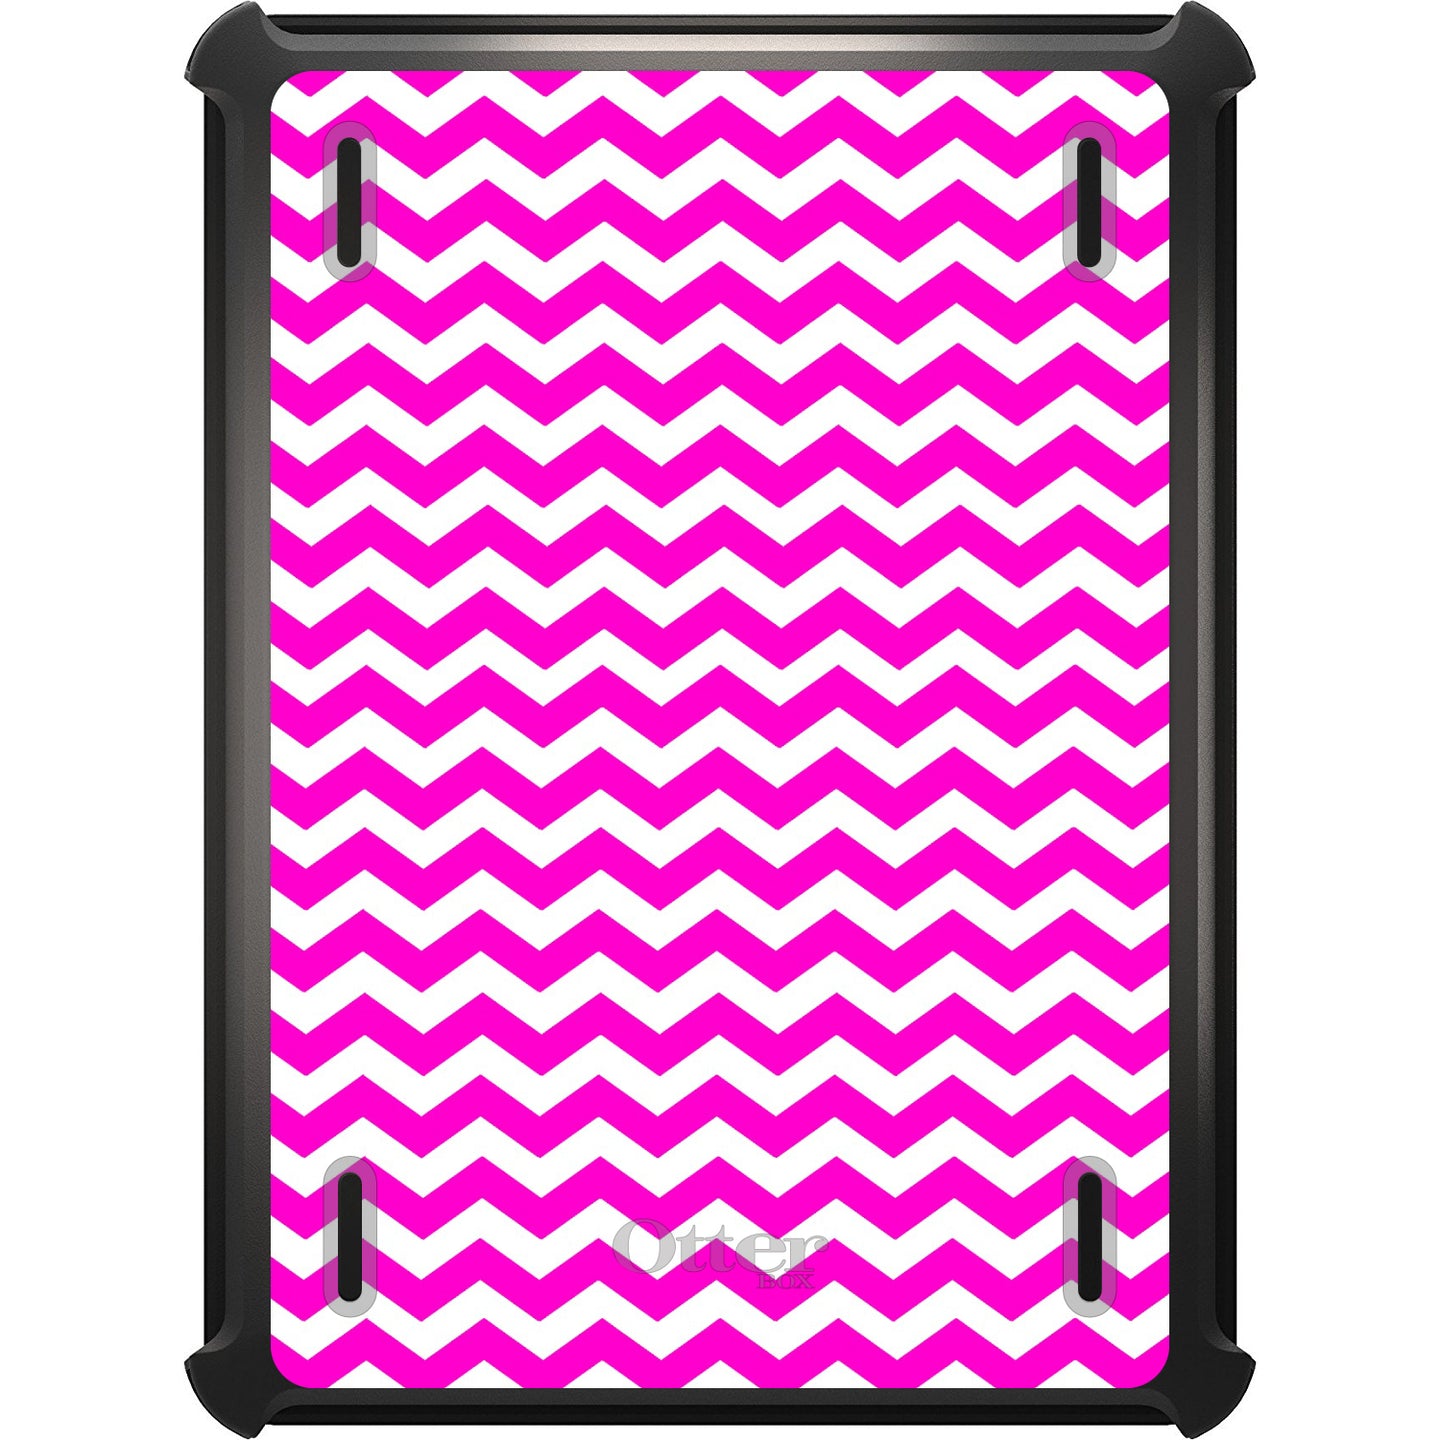 DistinctInk™ OtterBox Defender Series Case for Apple iPad / iPad Pro / iPad Air / iPad Mini - Hot Pink White Chevron Stripes Wave